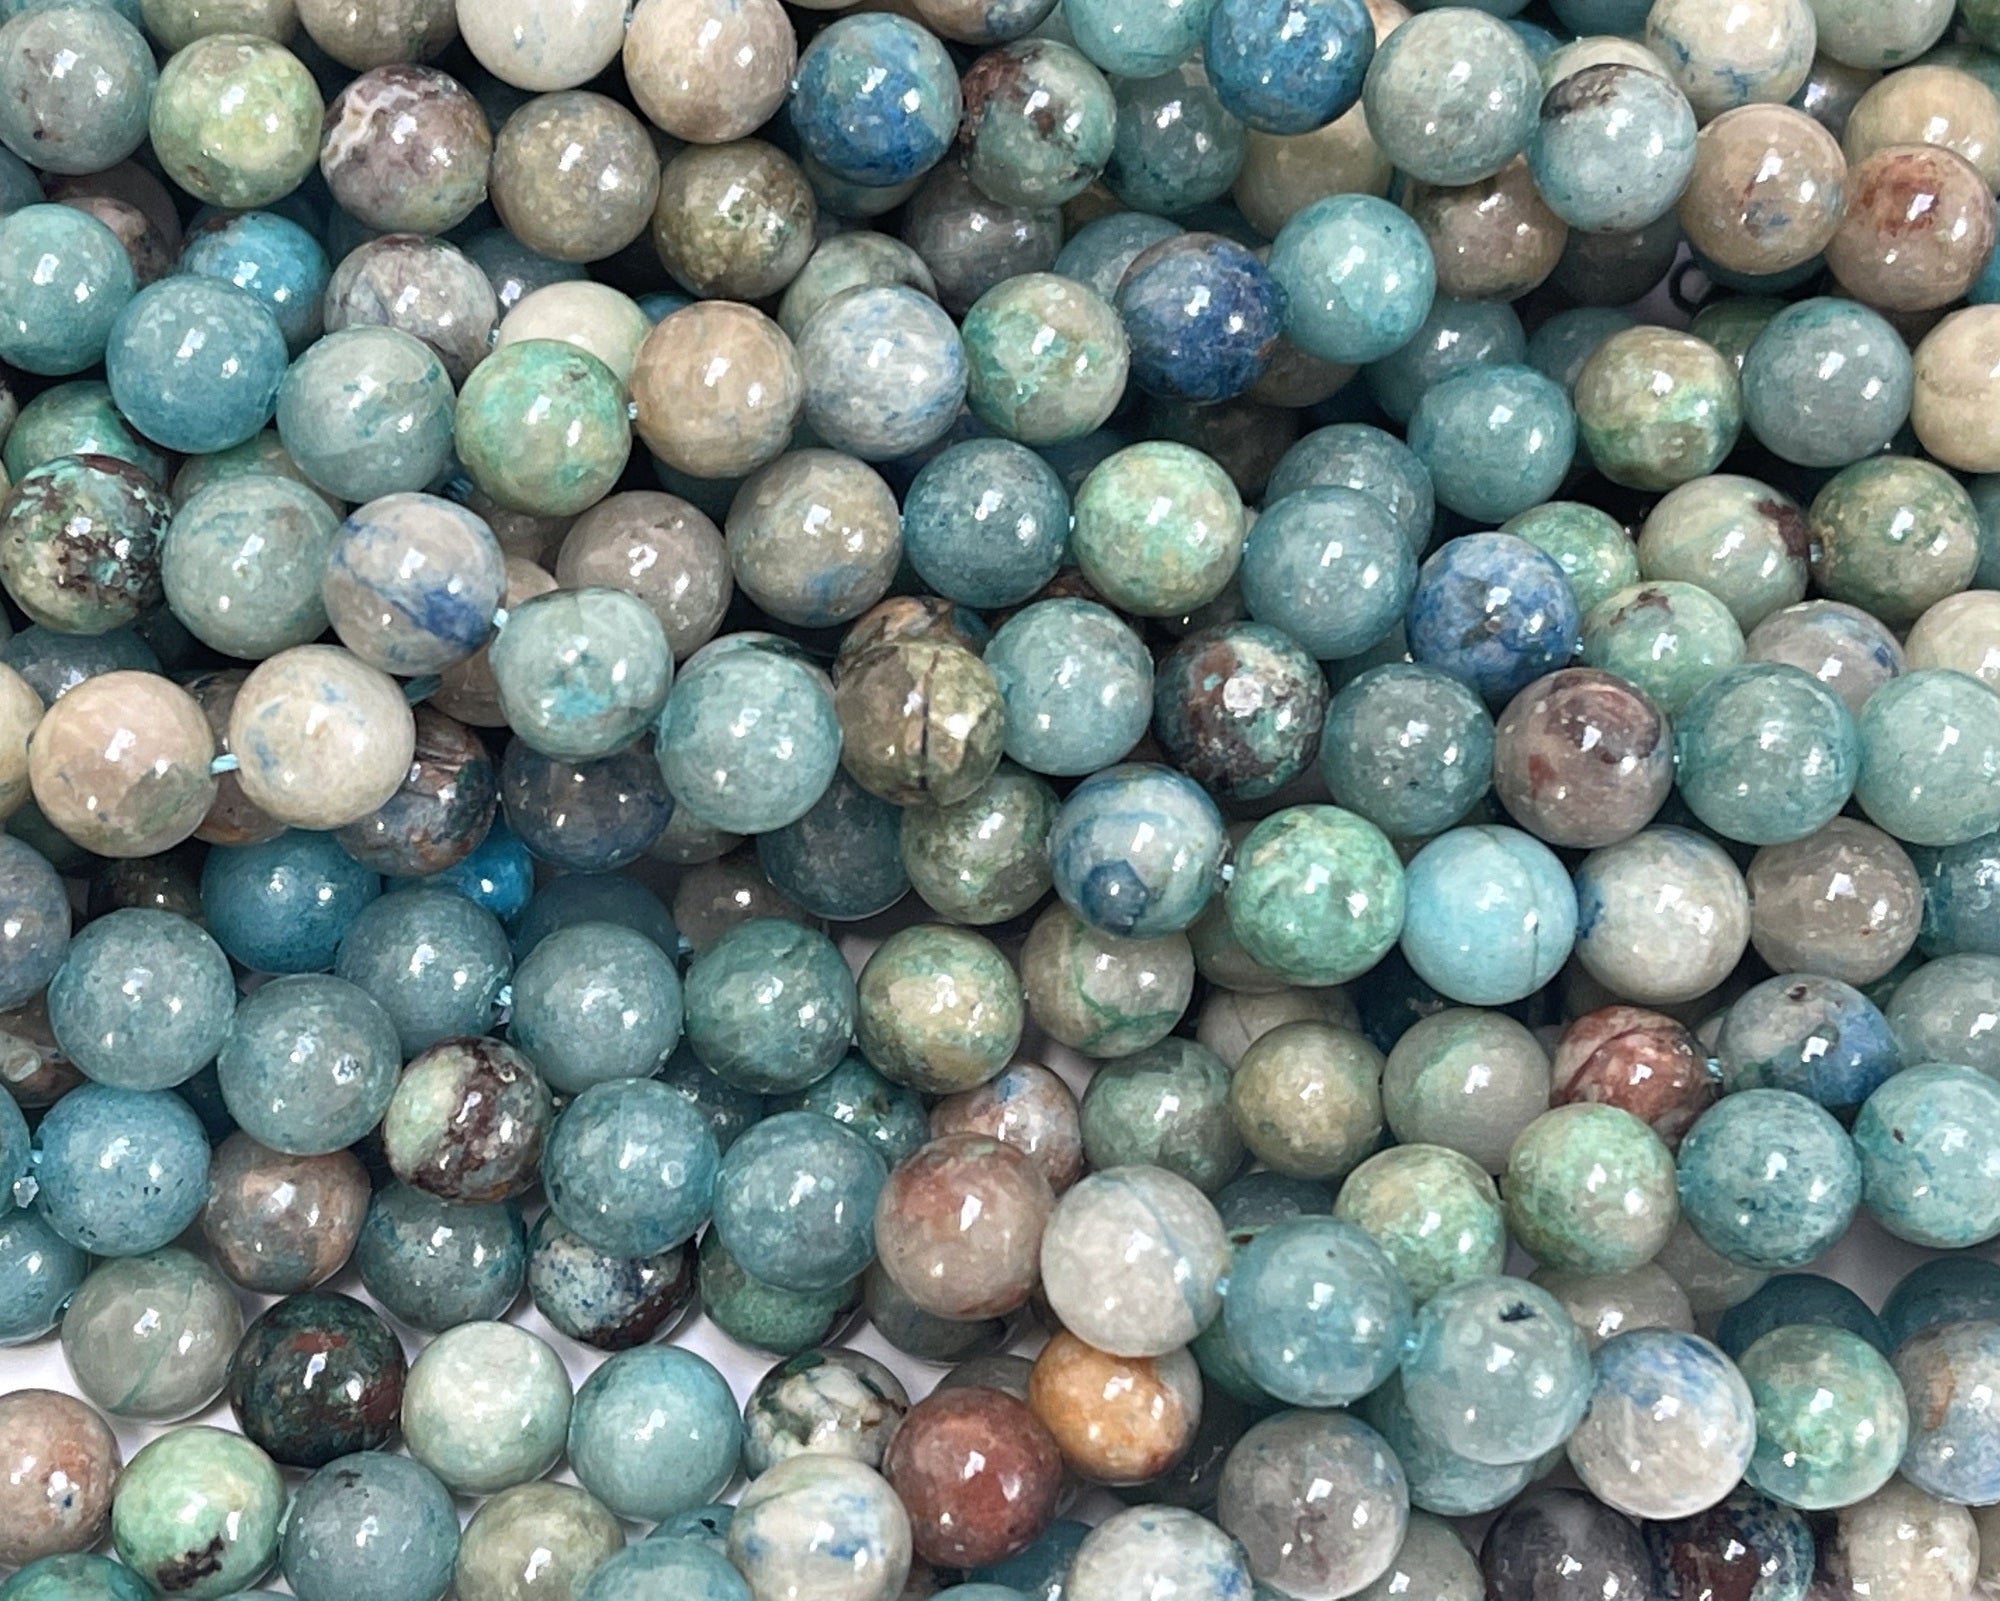 Blue Chrysocolla in Quartz 8mm round natural gemstone beads 15" strand